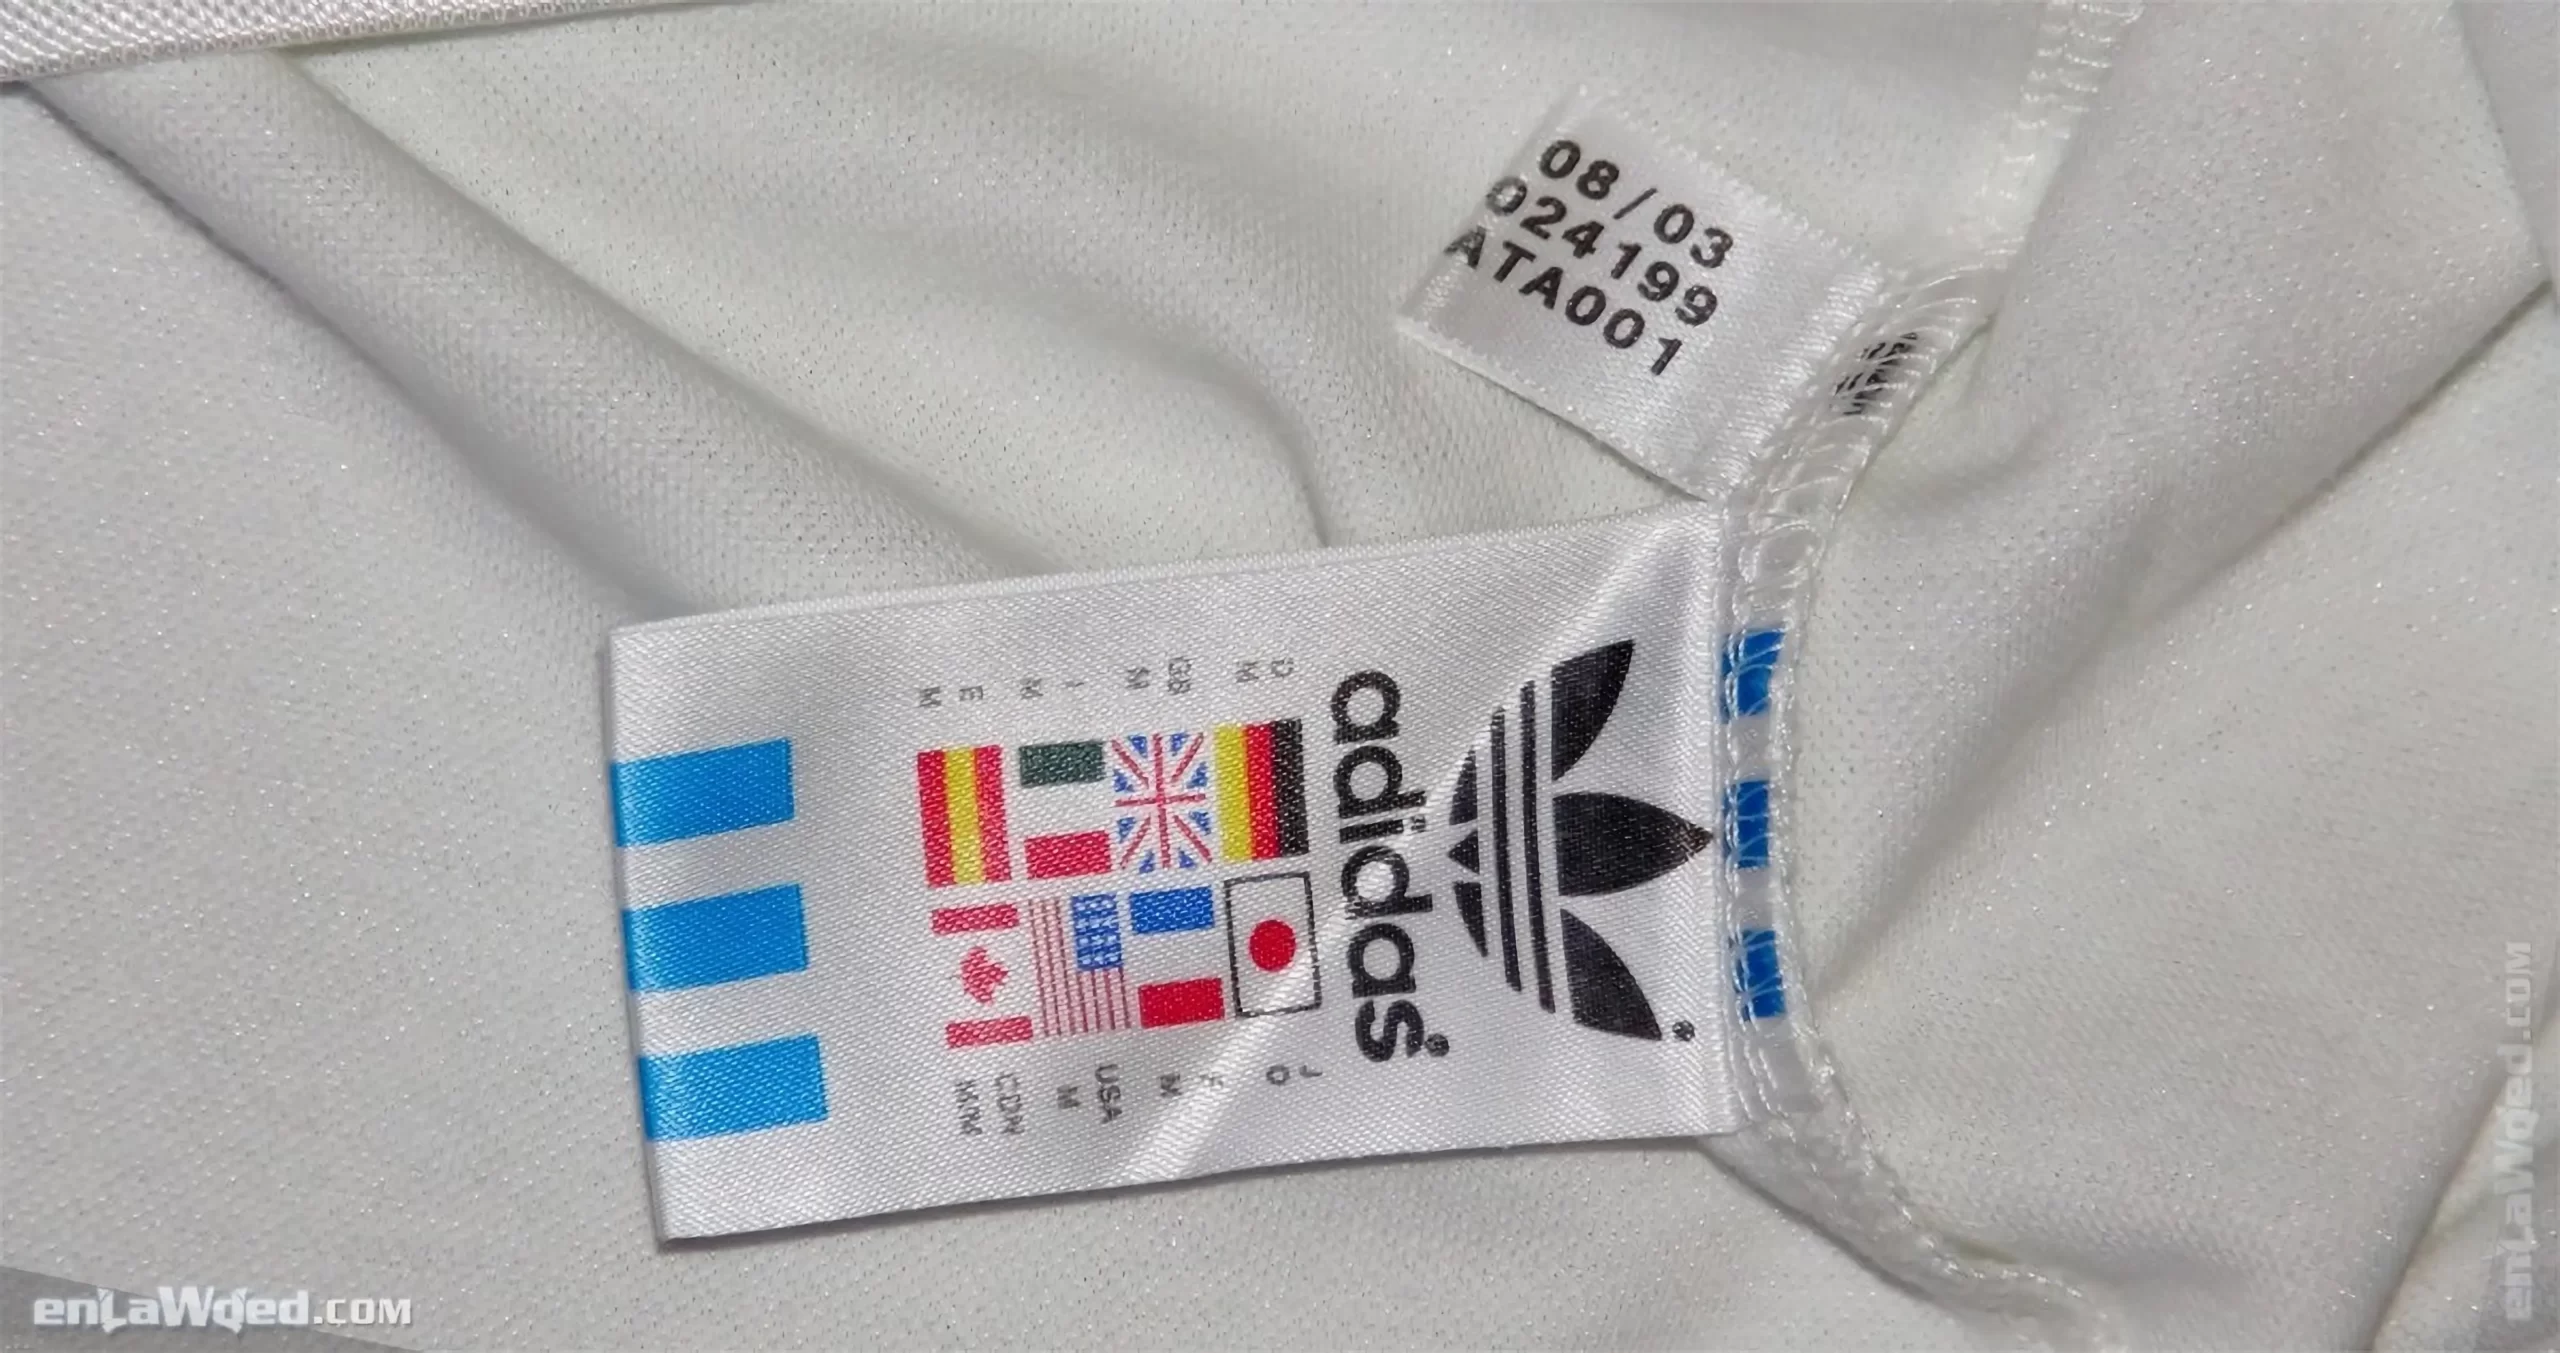 Men’s 2003 Chile ’82 Soto Jersey by Adidas Originals: Audacity (EnLawded.com file #lmc4j780sqscyqo4cy)